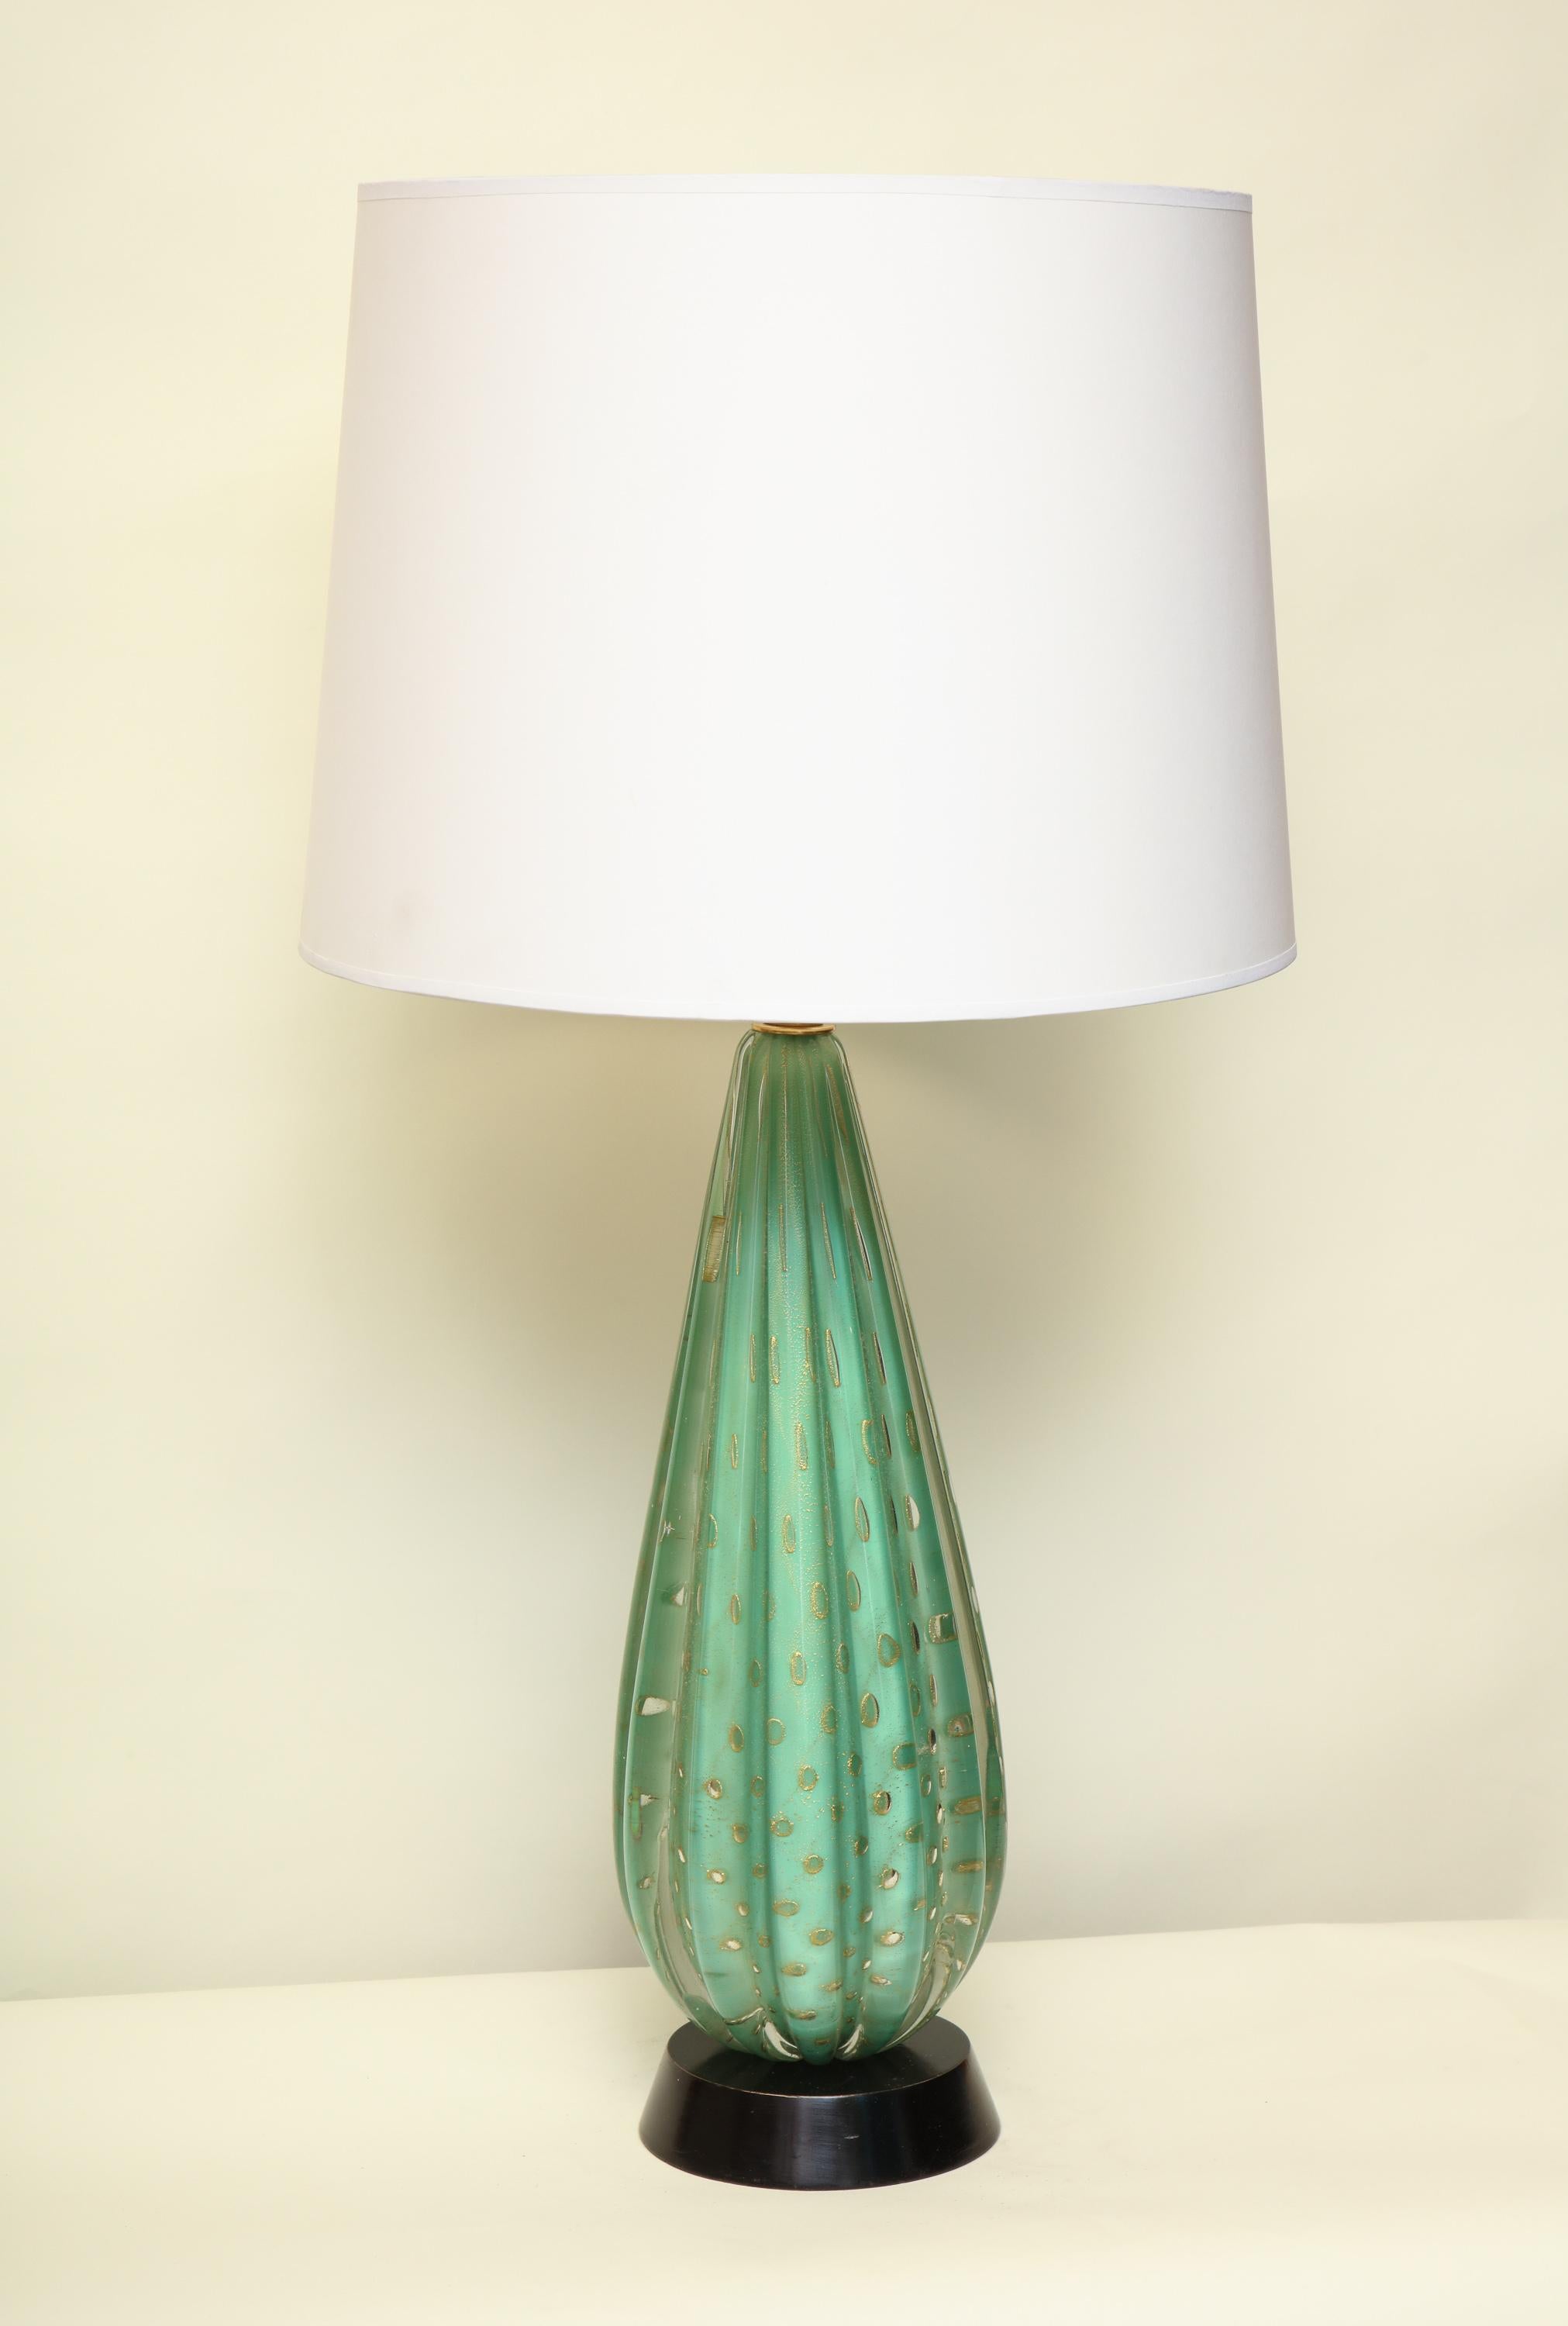 Seguso Table Lamp Murano Art Glass Mid-Century Modern, Italy, 1950s For Sale 1